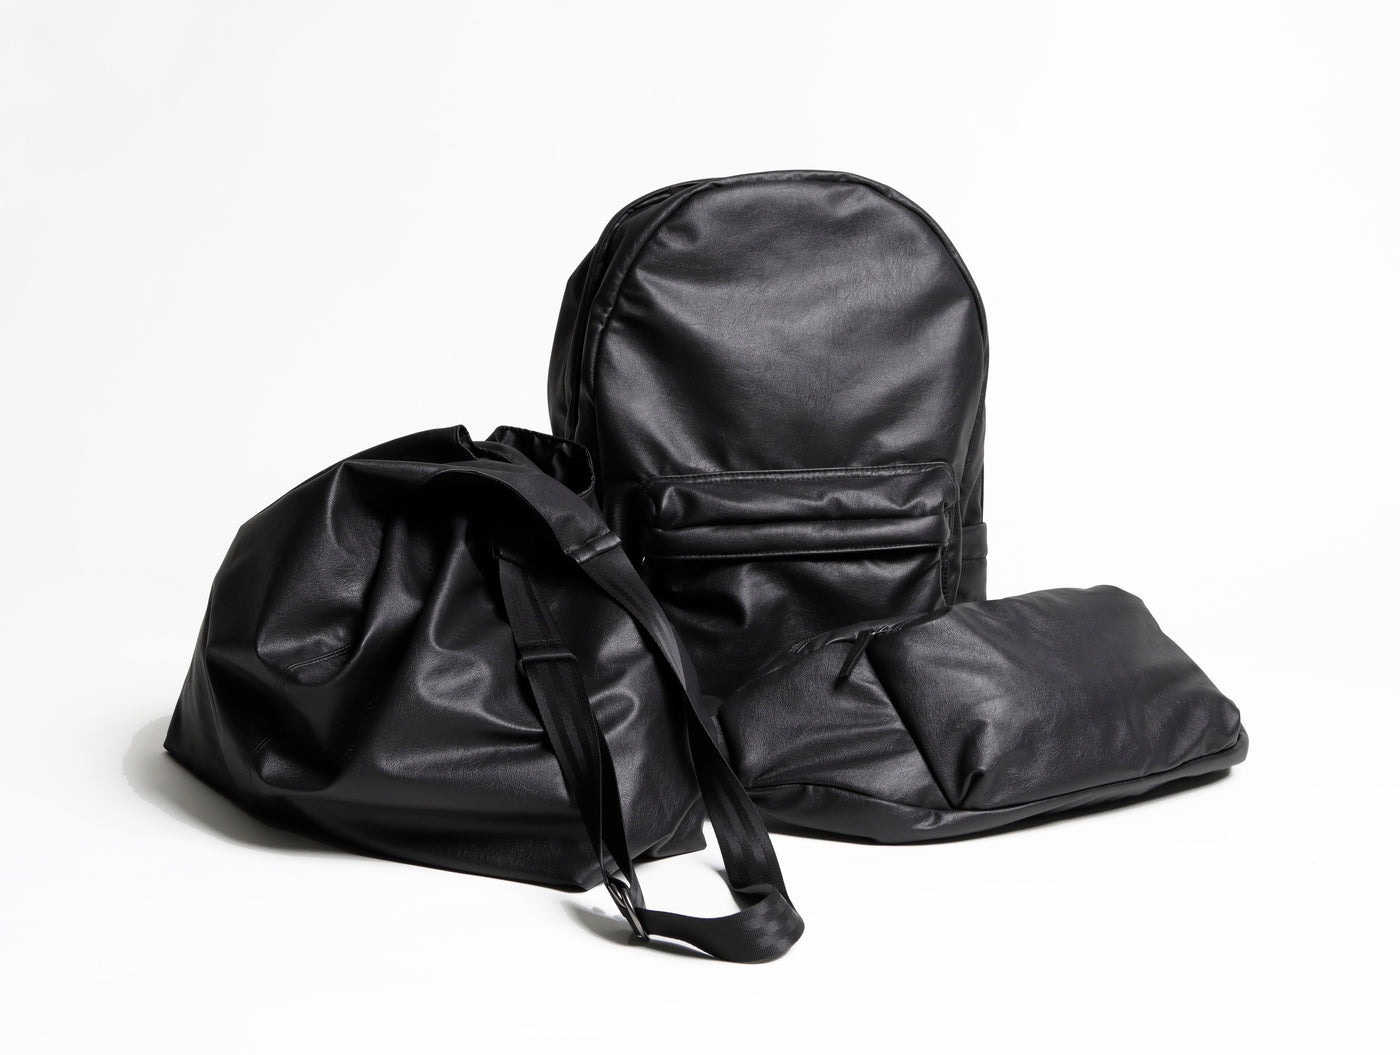 AA22-097 Synthetic leather backpack